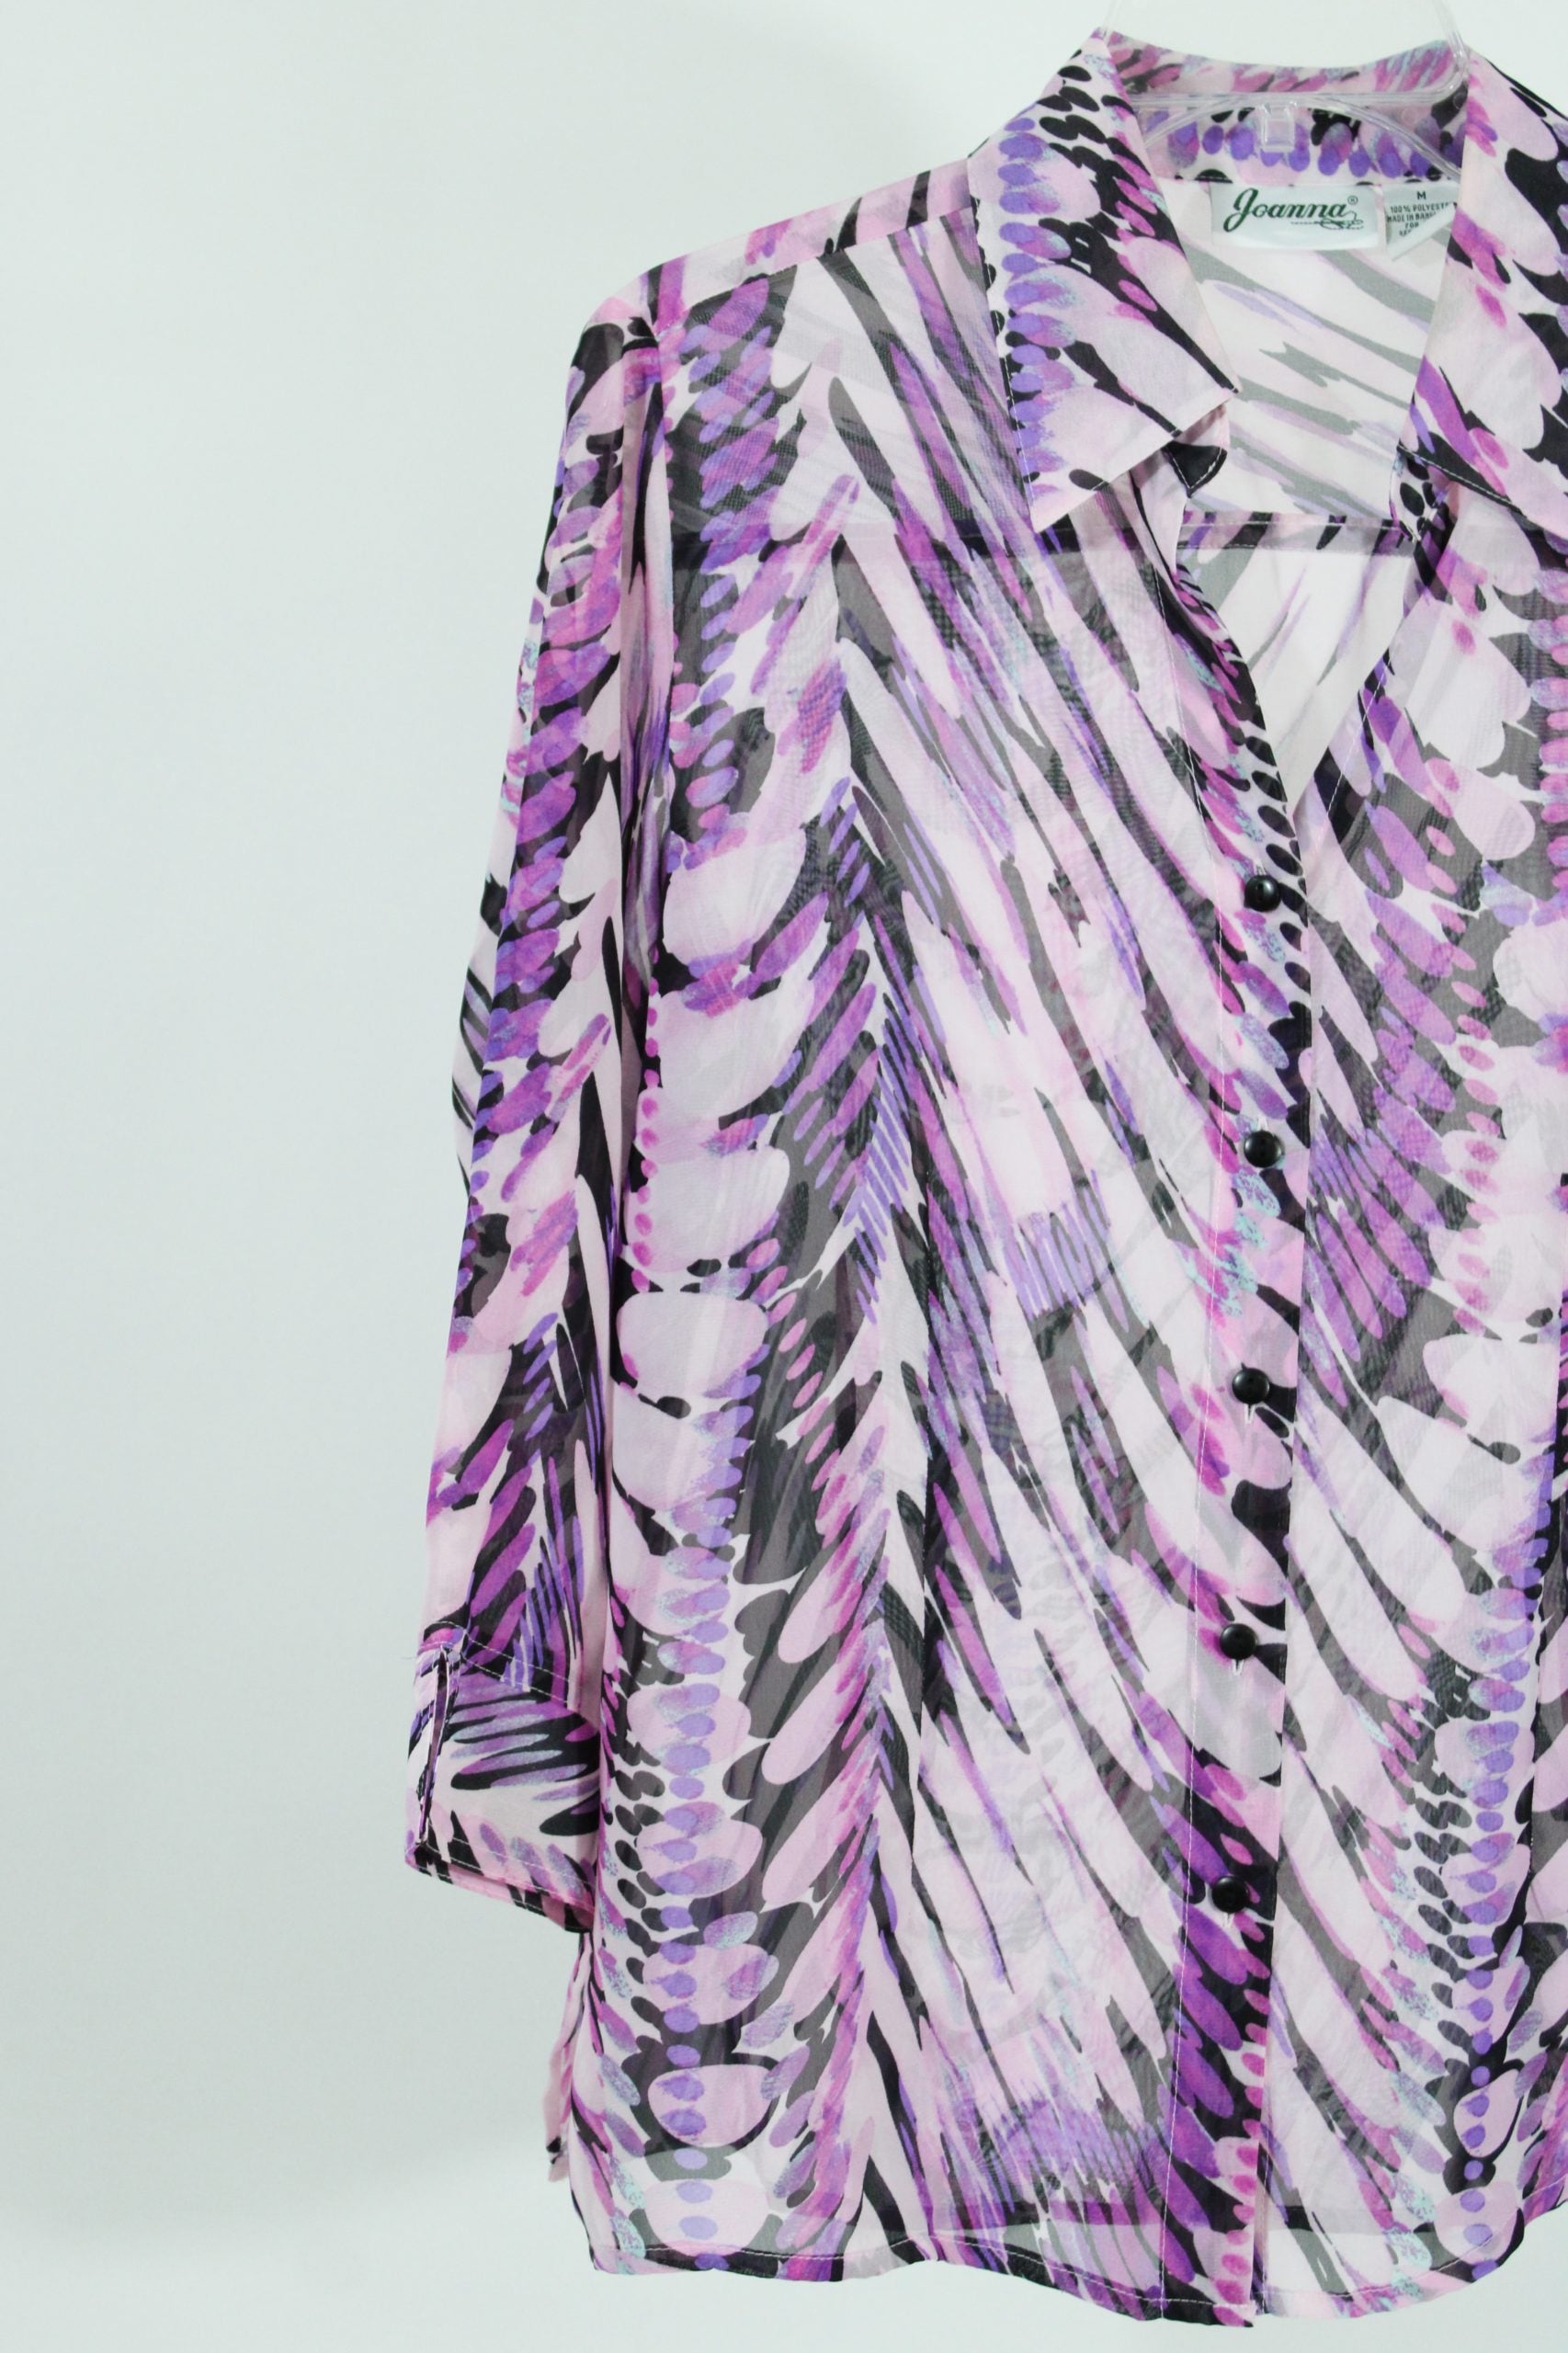 Joanna Pink & Purple Patterned Top | Size M